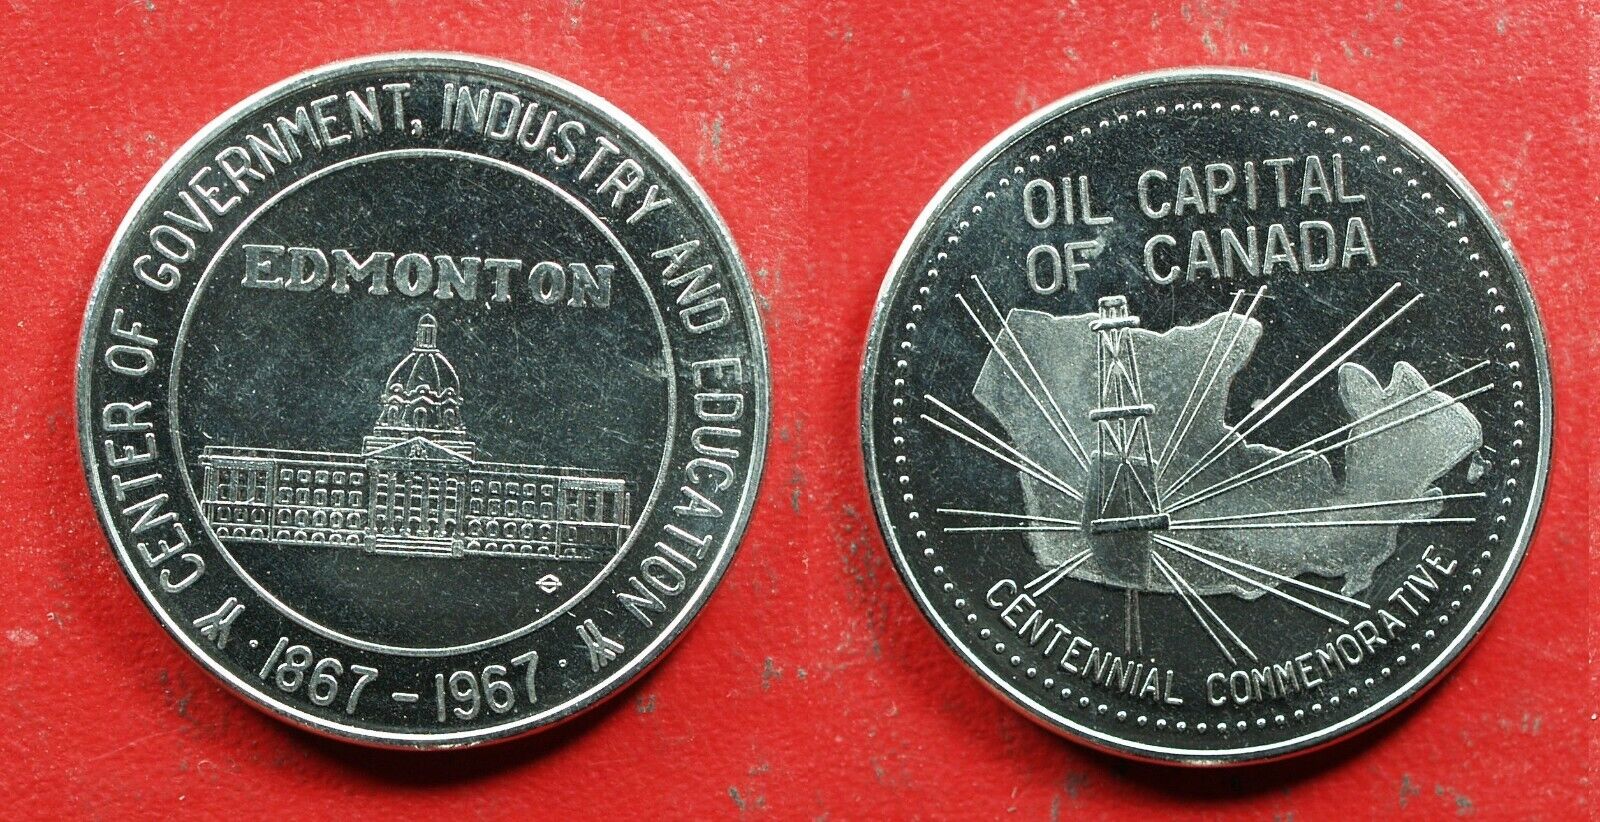 1967 Canada Centennial - Edmonton - Oil Capital of Canada medal - UNC  st#988